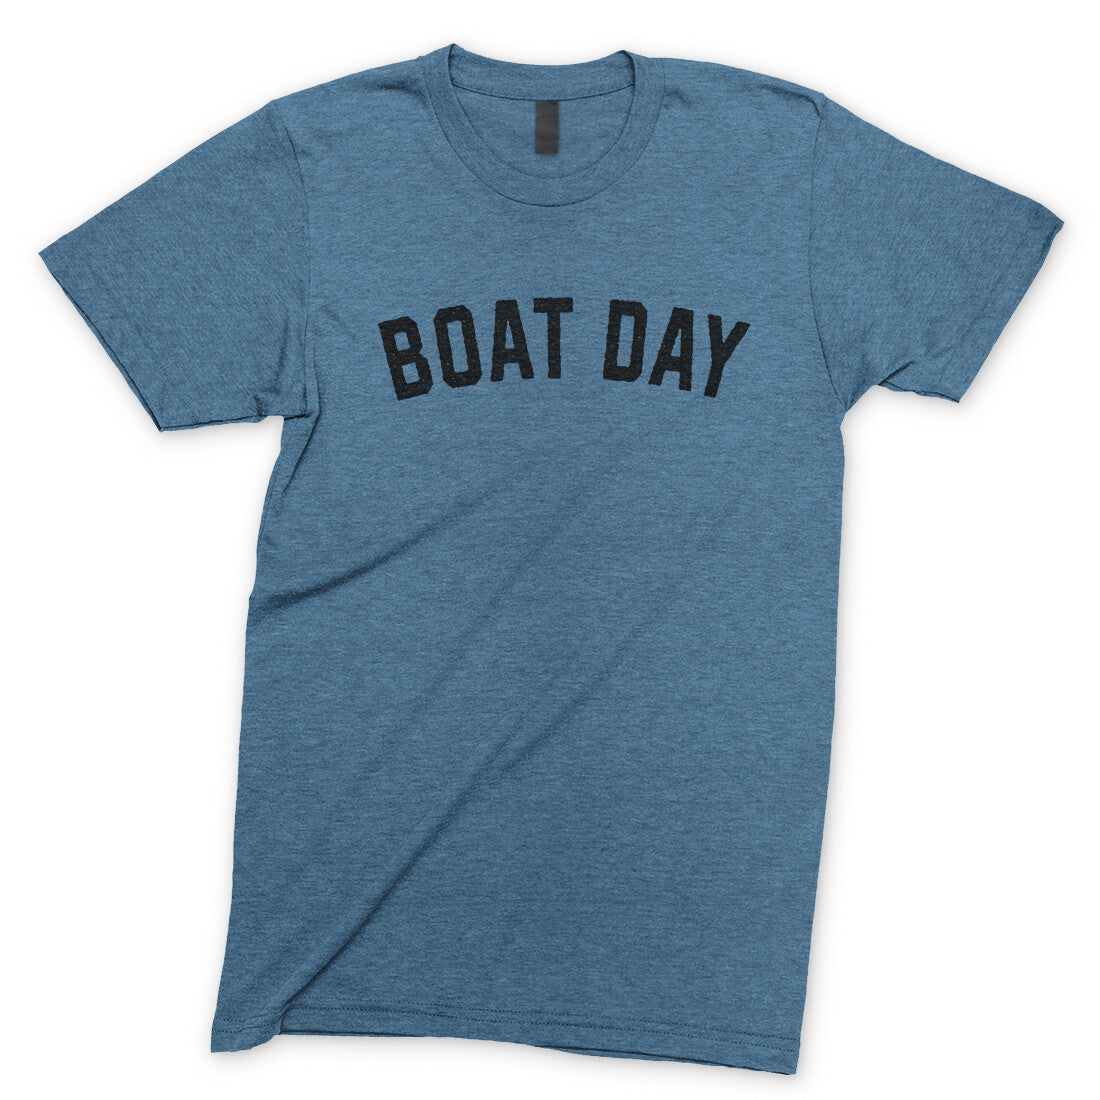 Boat Day in Heather Indigo Color